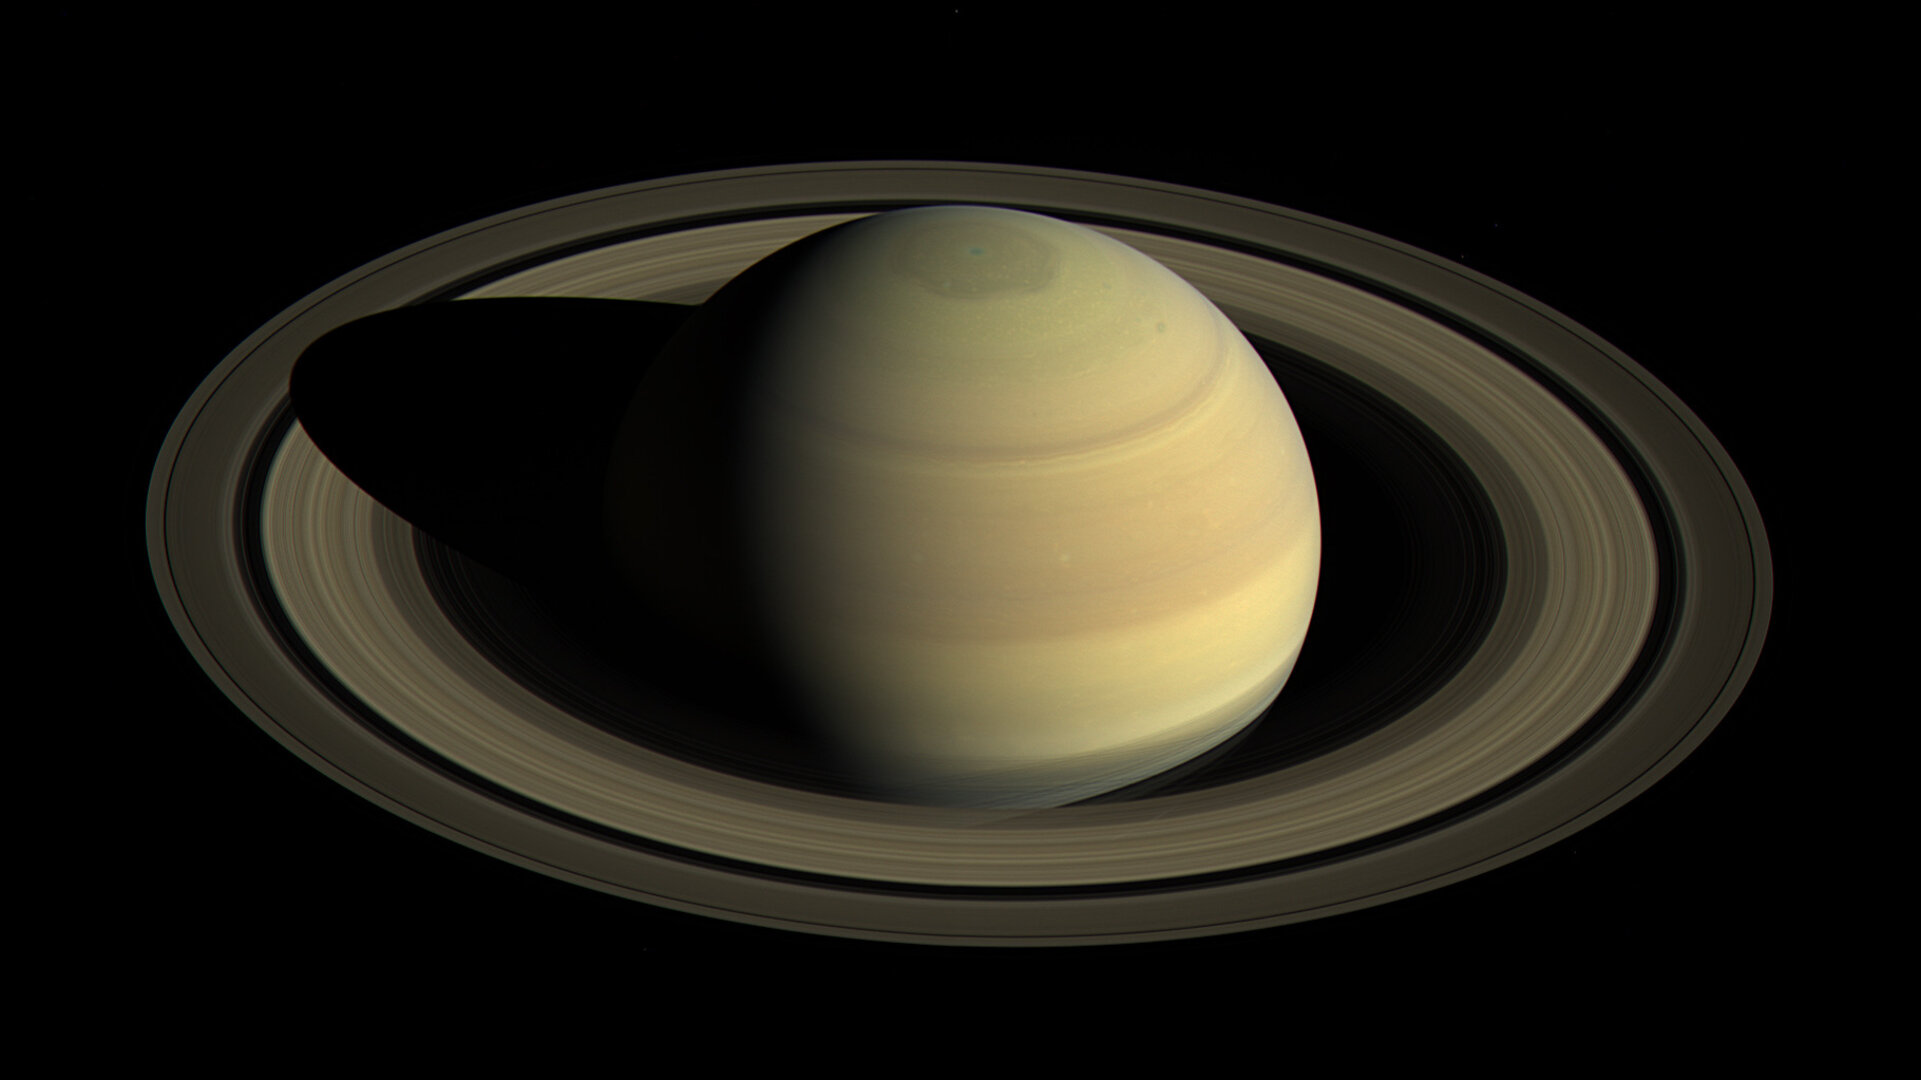 Above Saturn